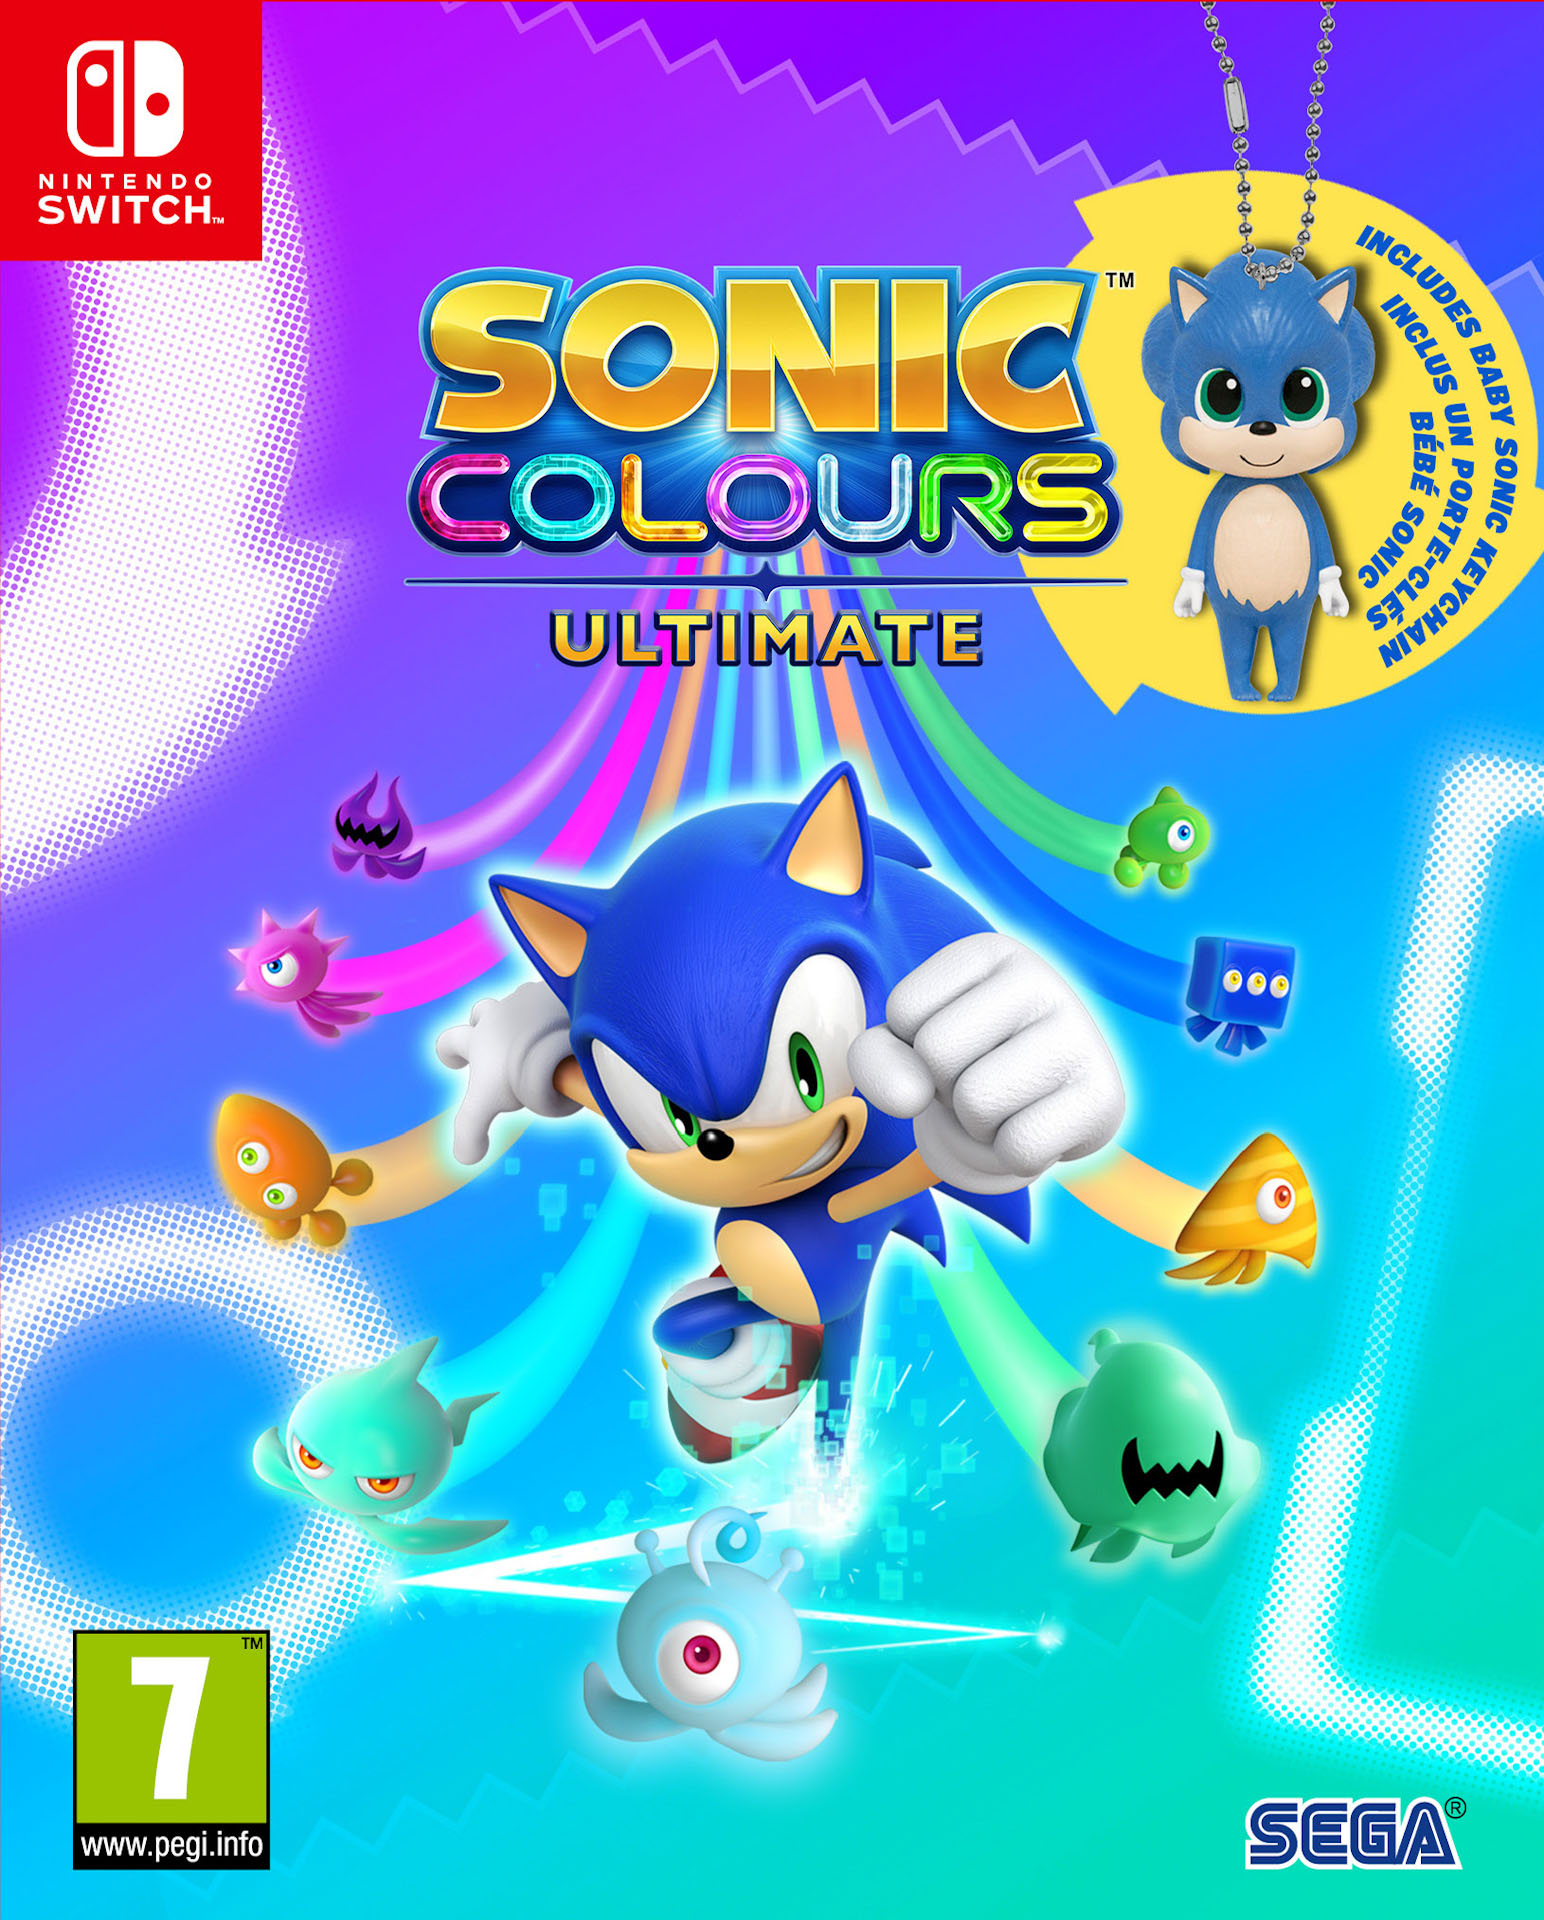 Sonic Colours Ultimate Switch - SEGA 1.10.01.01.013